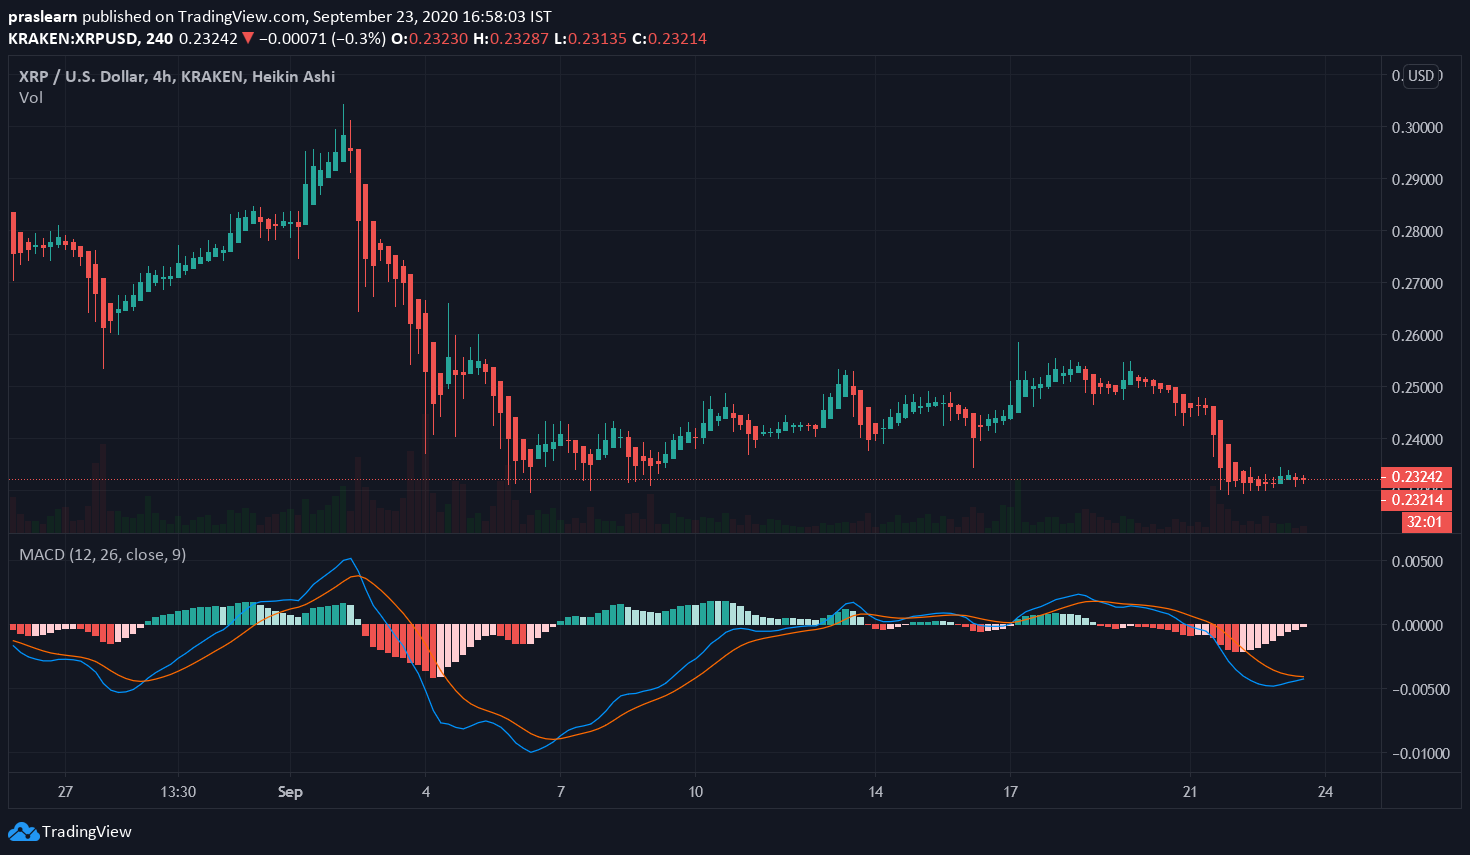 XRP/USD 4 H Chart – Tradingview

